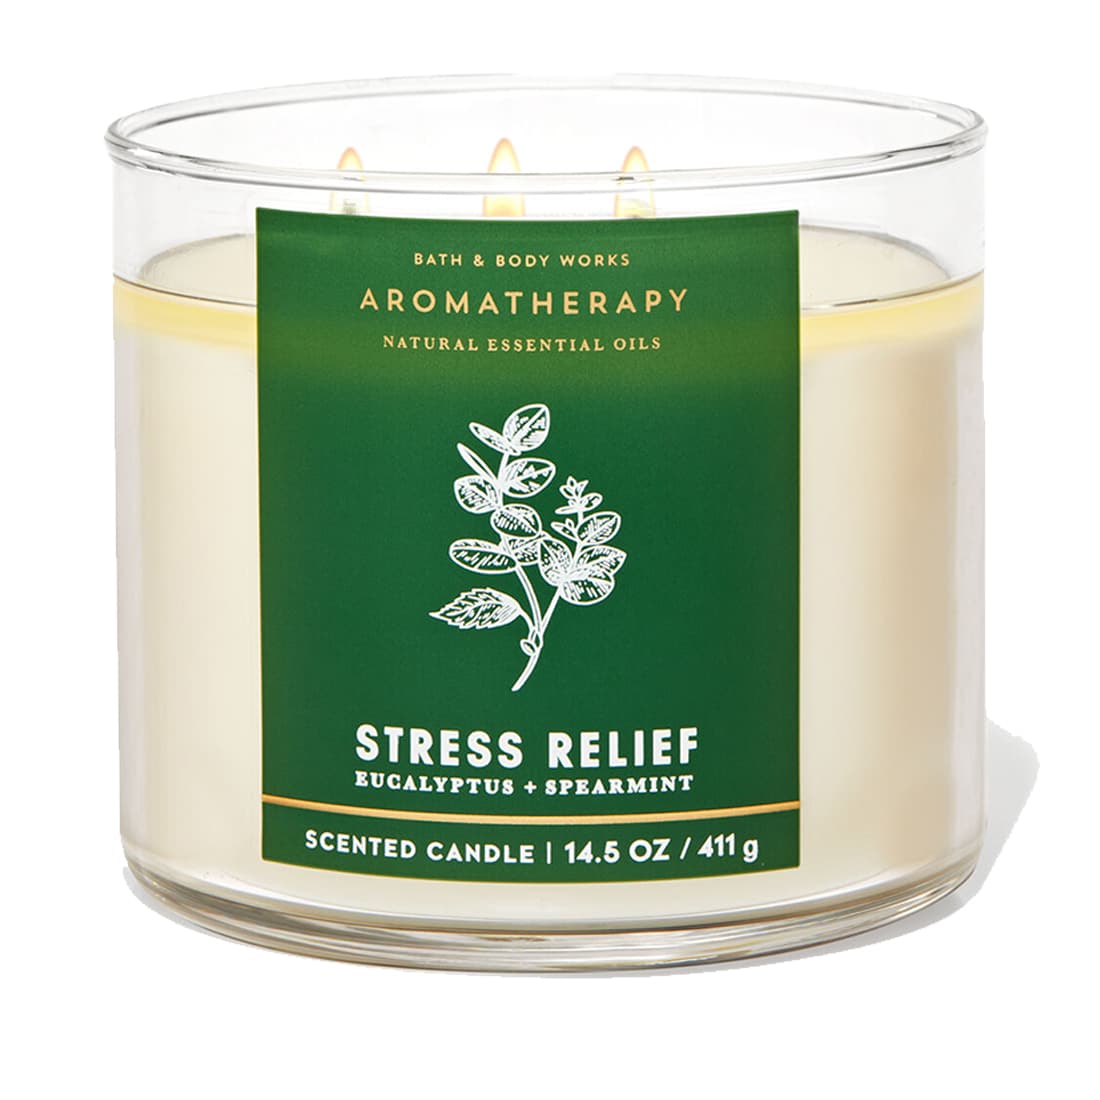 Stress aromatherapy relief